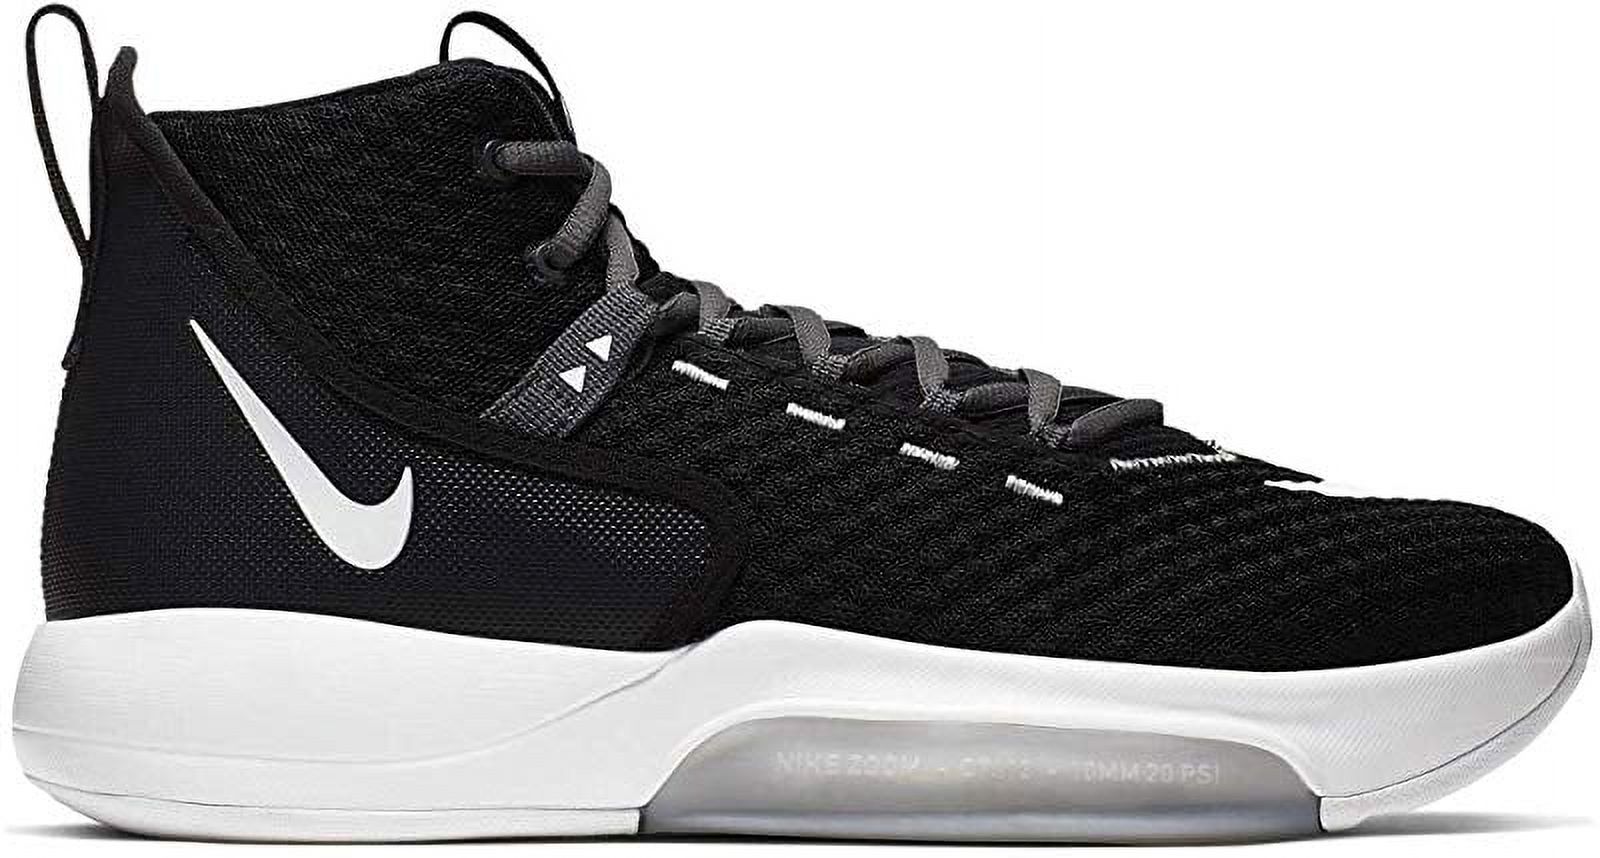 Nike Men's Zoom Rize TB Basketball Shoe, BQ5468-001 Black/White, 12 US - image 1 of 4